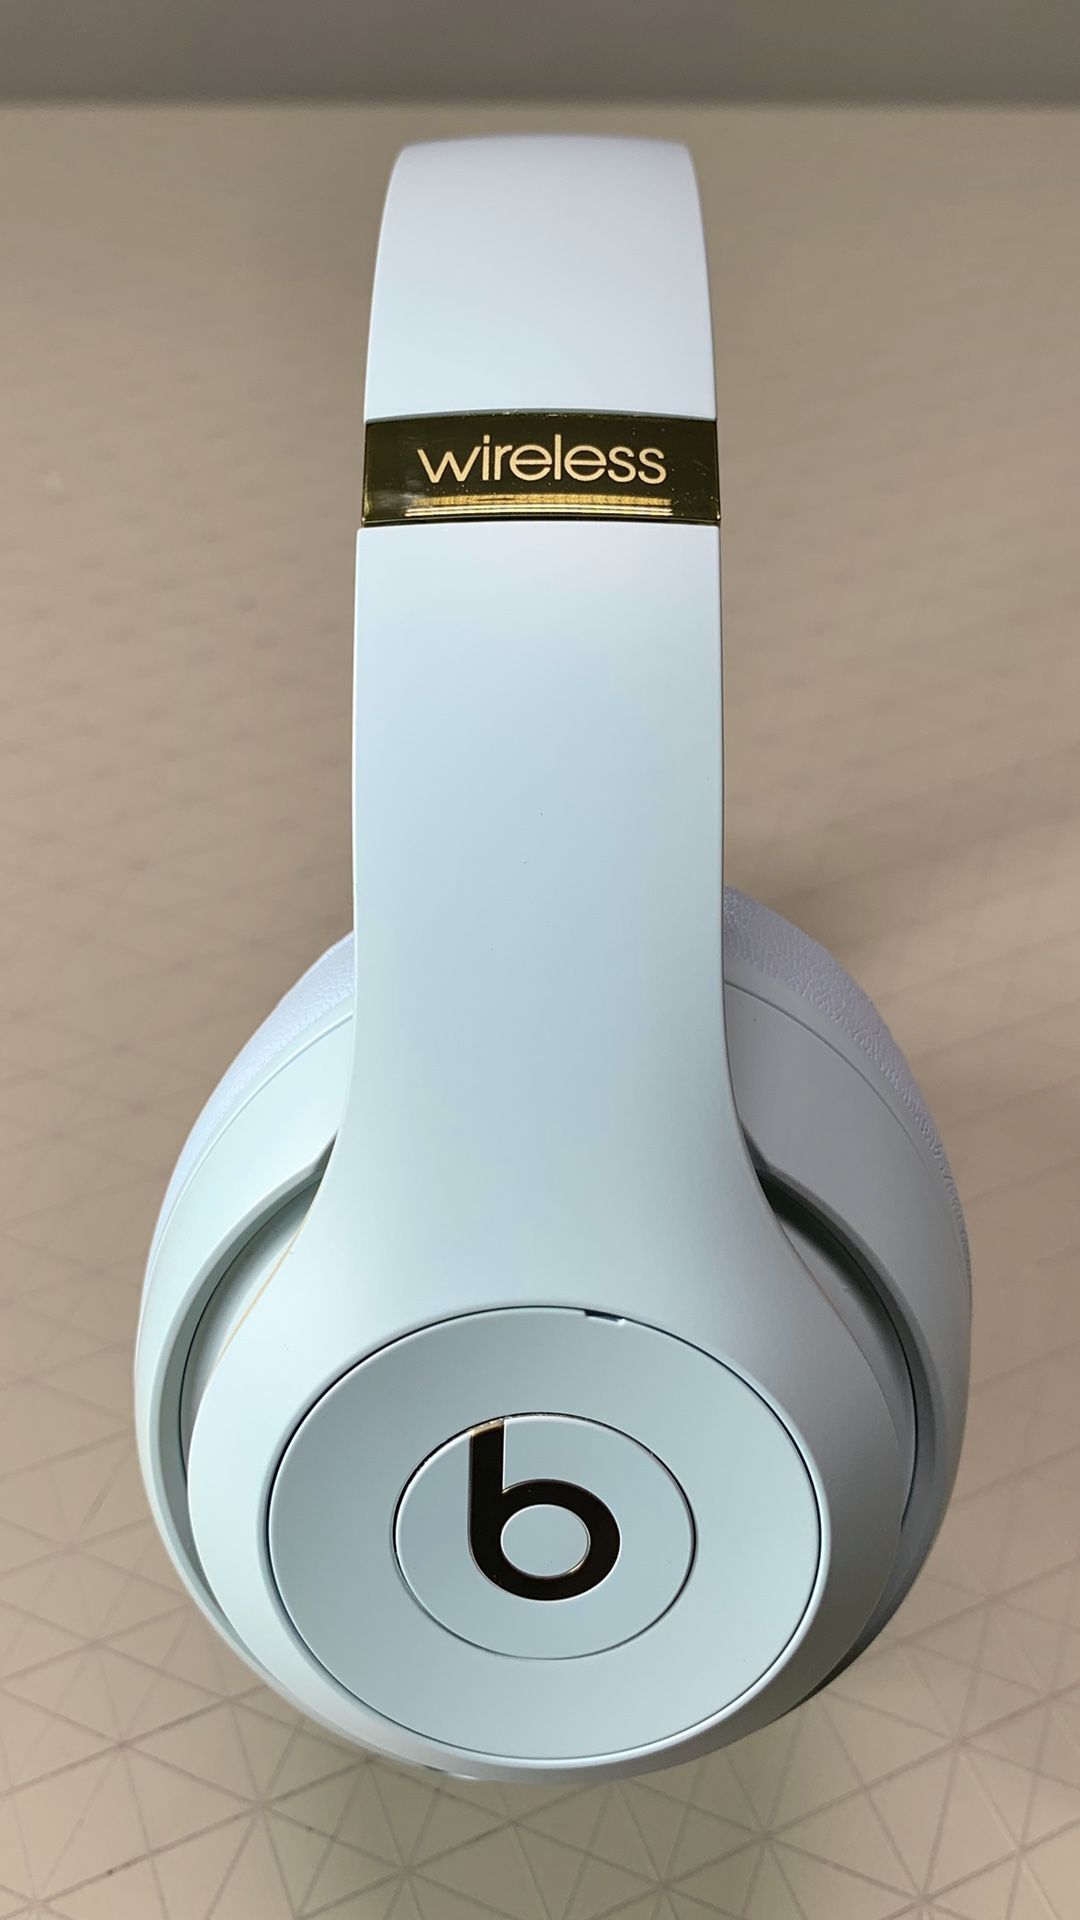 << LIKE NEW >> BEATS STUDIO 3 Wireless Headphone Bluetooth - 22 Hours of Listening Time - Apple Chip - Noice Cancelation